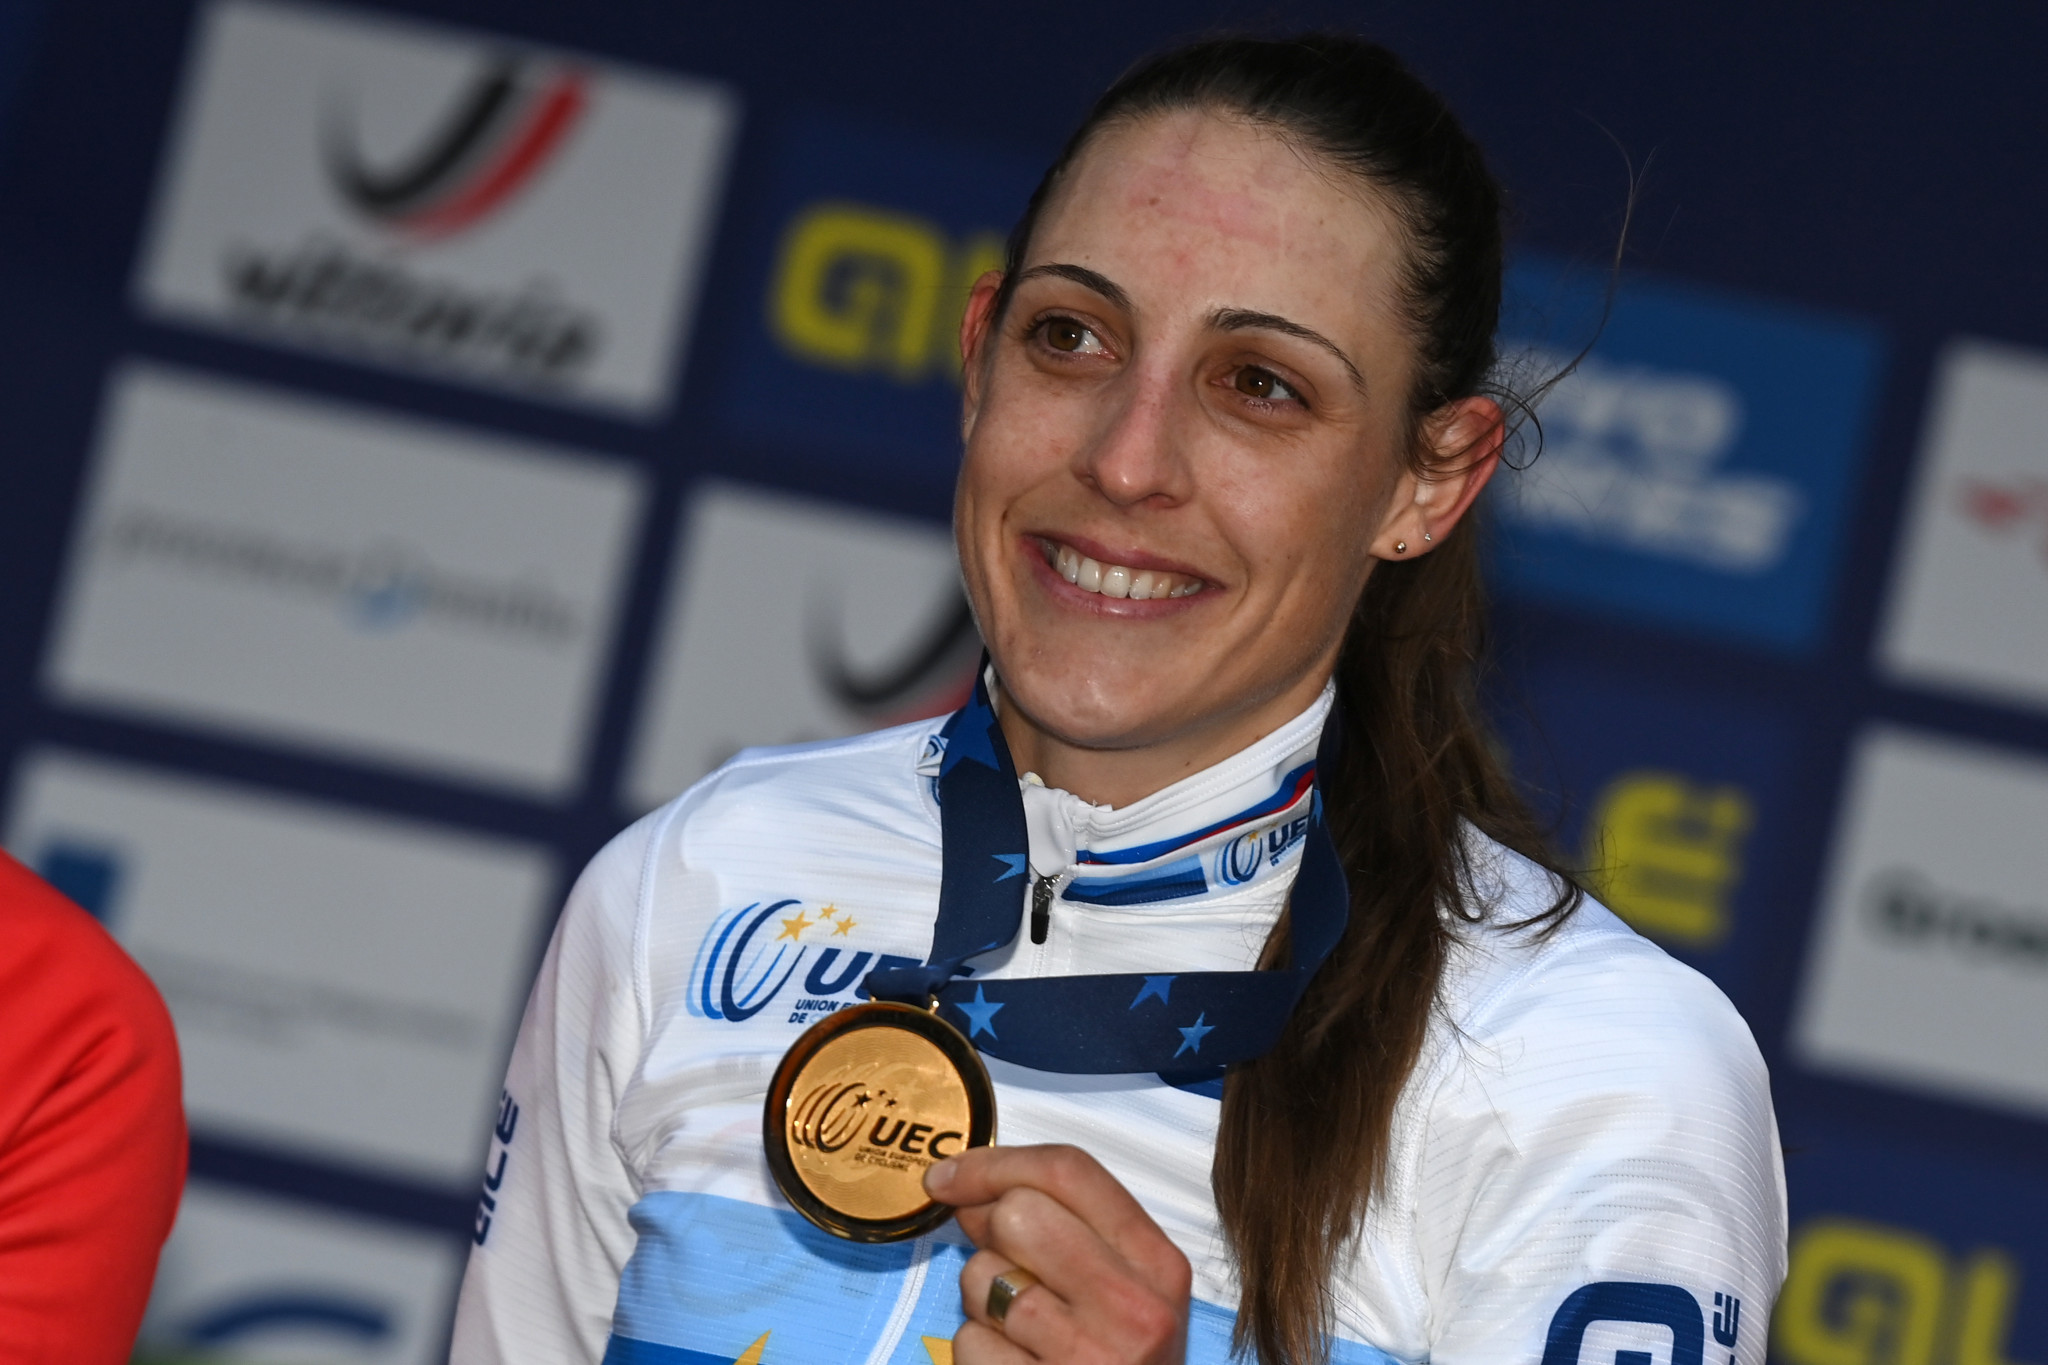 Lucinda Brand clinches European cyclo-cross title at Col du Vam